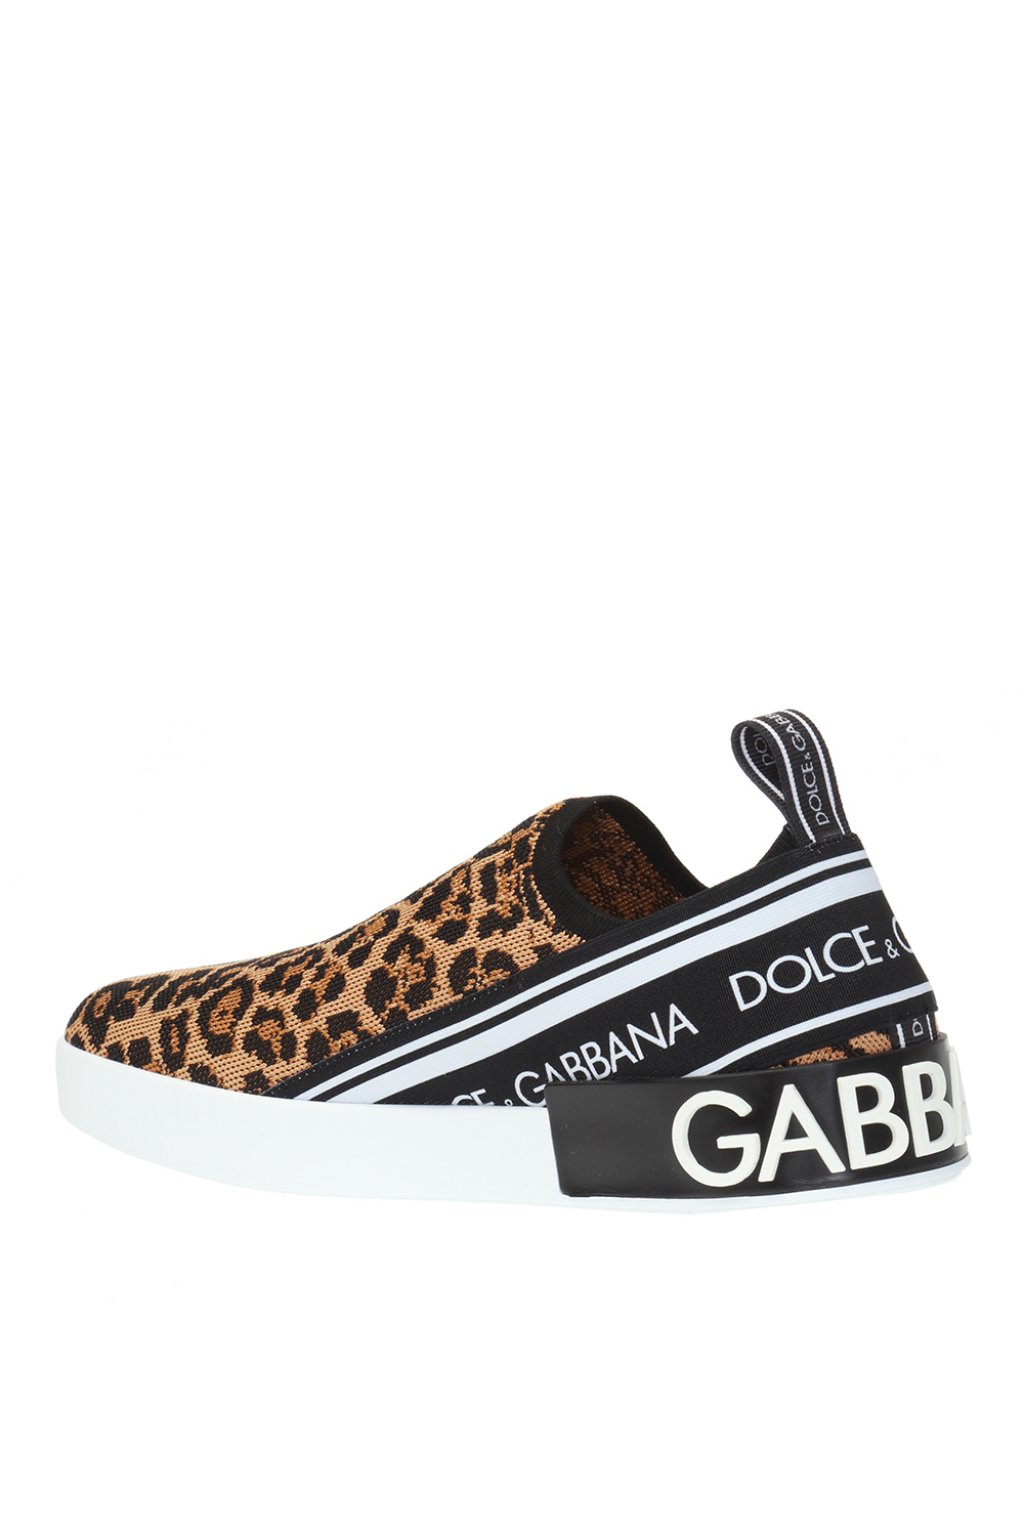 Dolce & Gabbana logo-plaque straight jeans Leopard motif slip-on sneakers